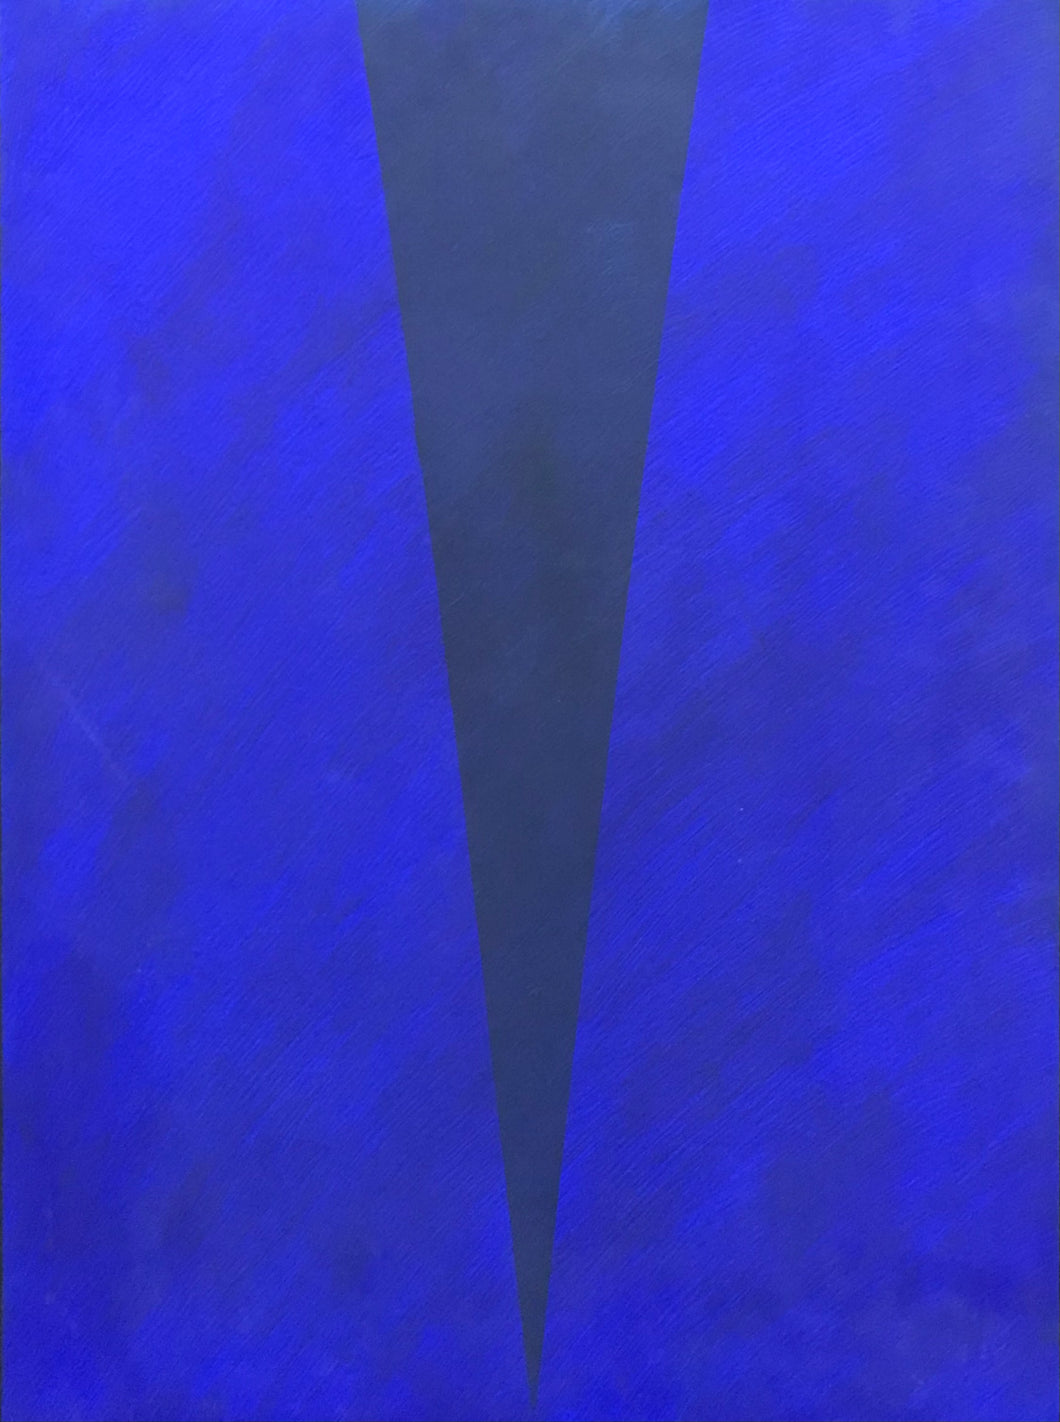 Gilbert Swimberghe, Blauw olie/papier/paneel